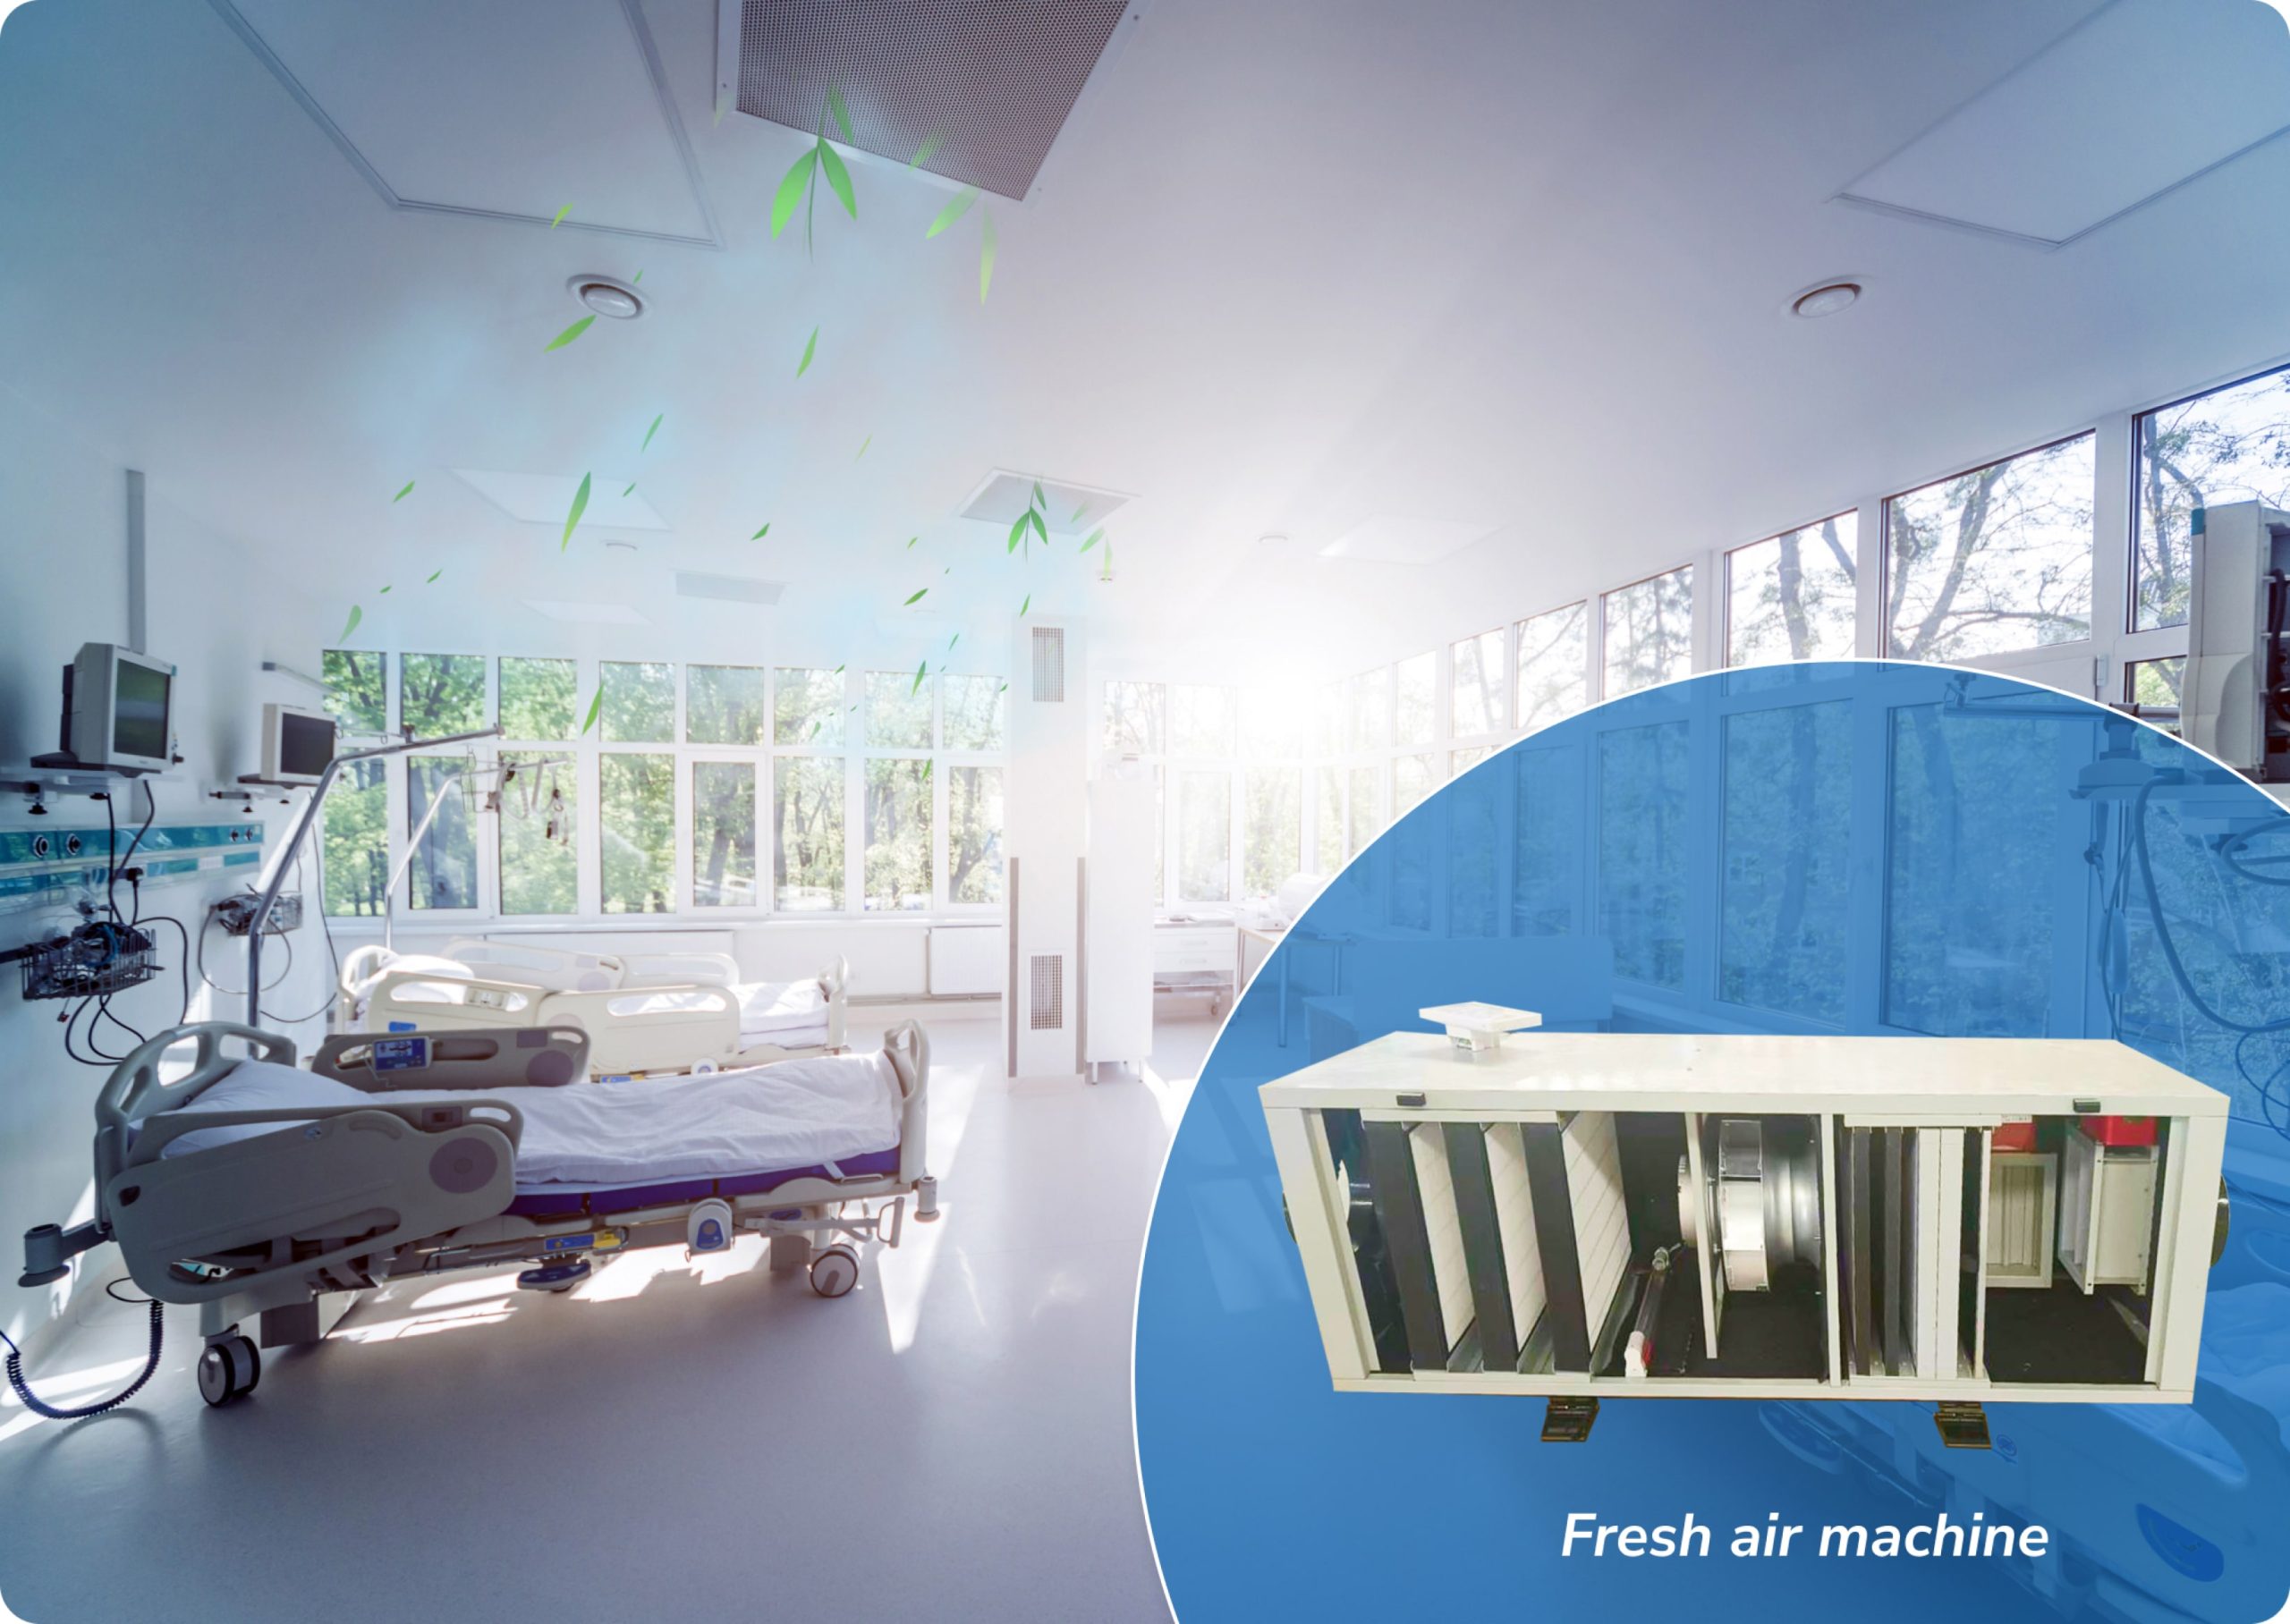 fresh air machine solutions for hospital